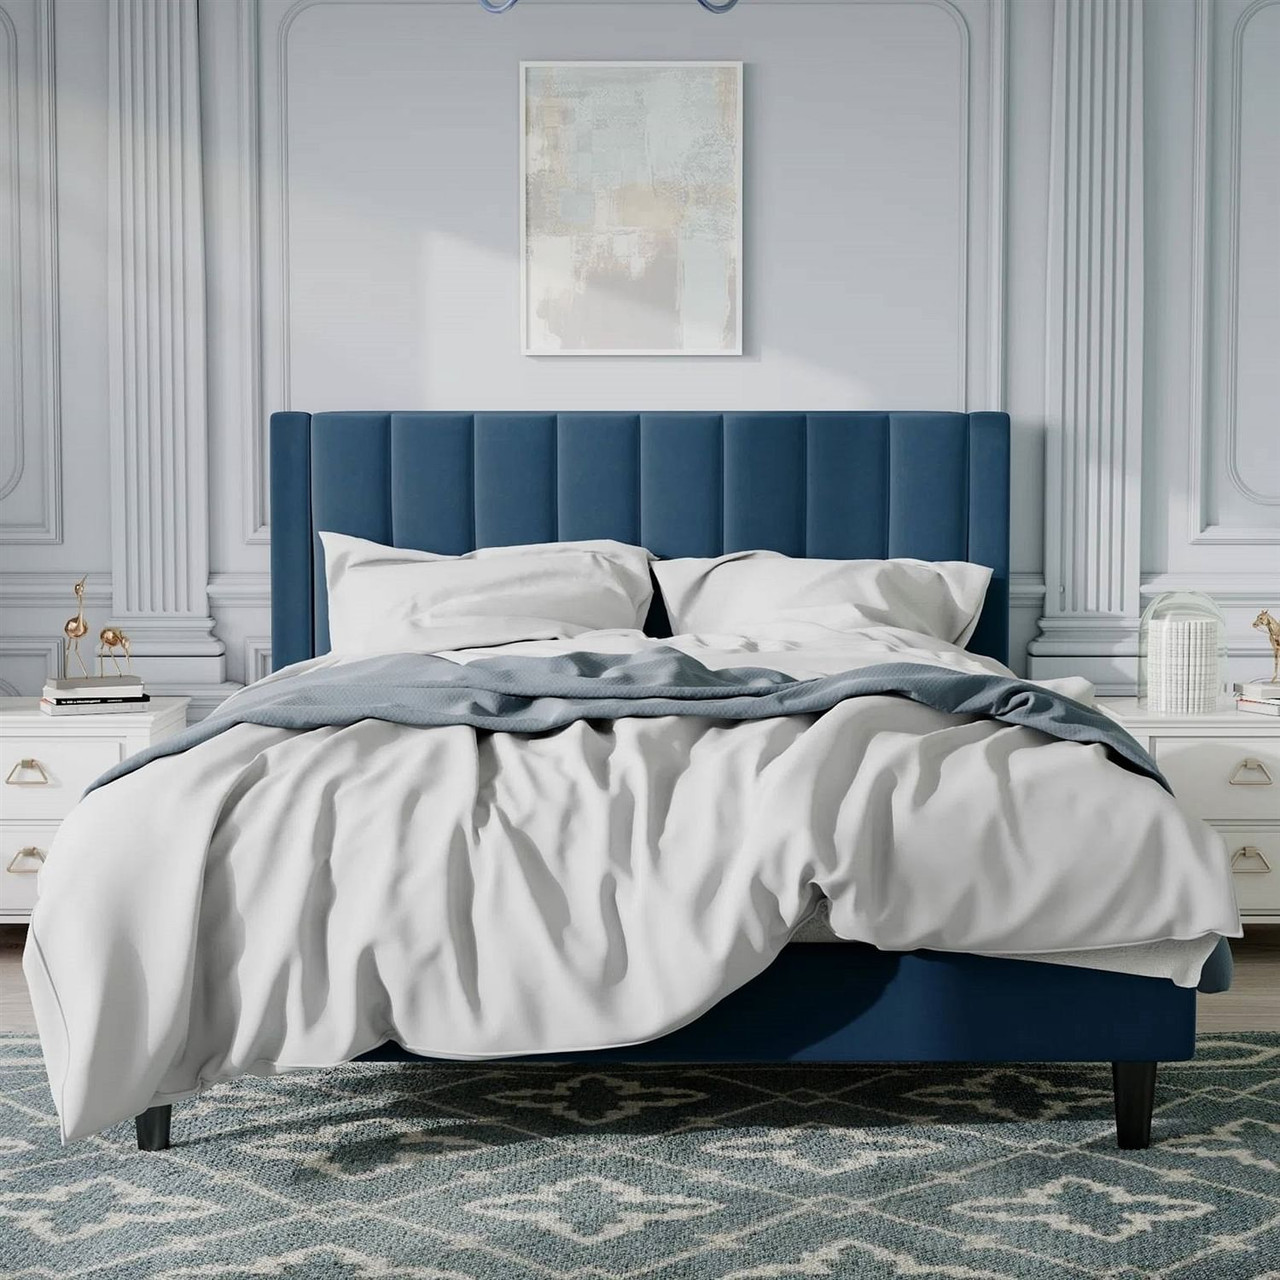 Queen size Modern Navy Blue Velvet Upholstered Platform Bed with Headboard